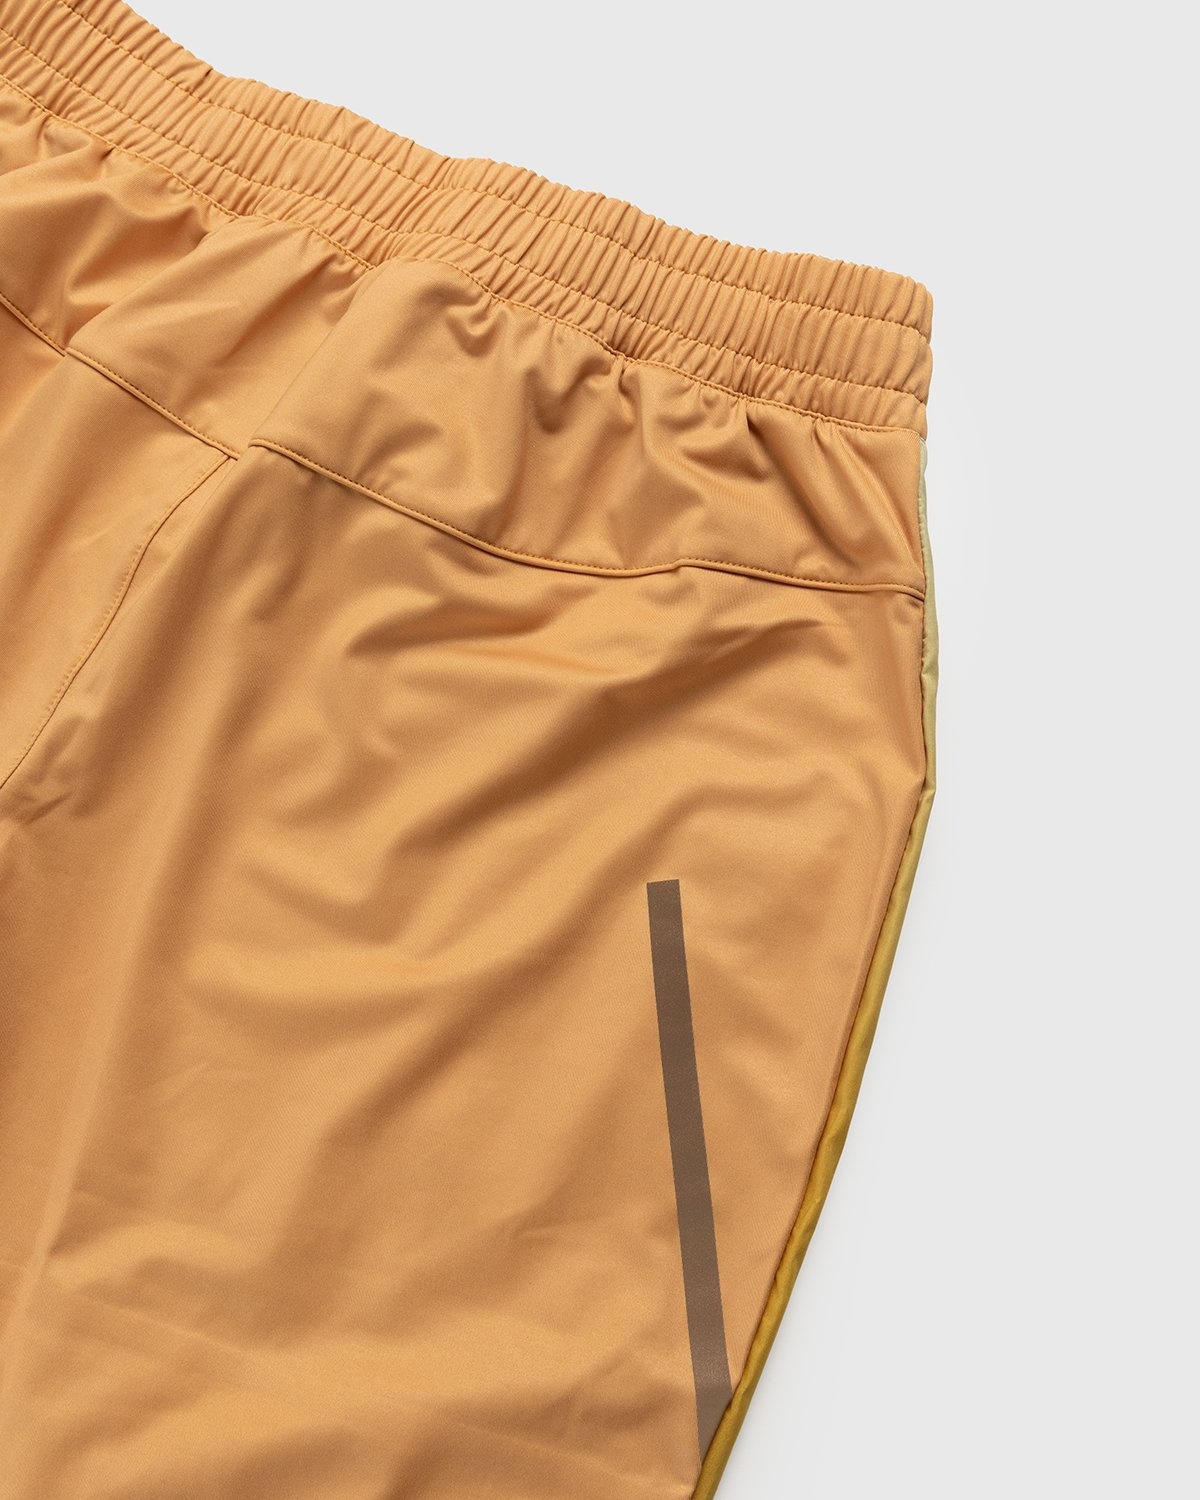 Loewe x On – Women's Technical Running Pants Gradient Orange - Pants - Orange - Image 4